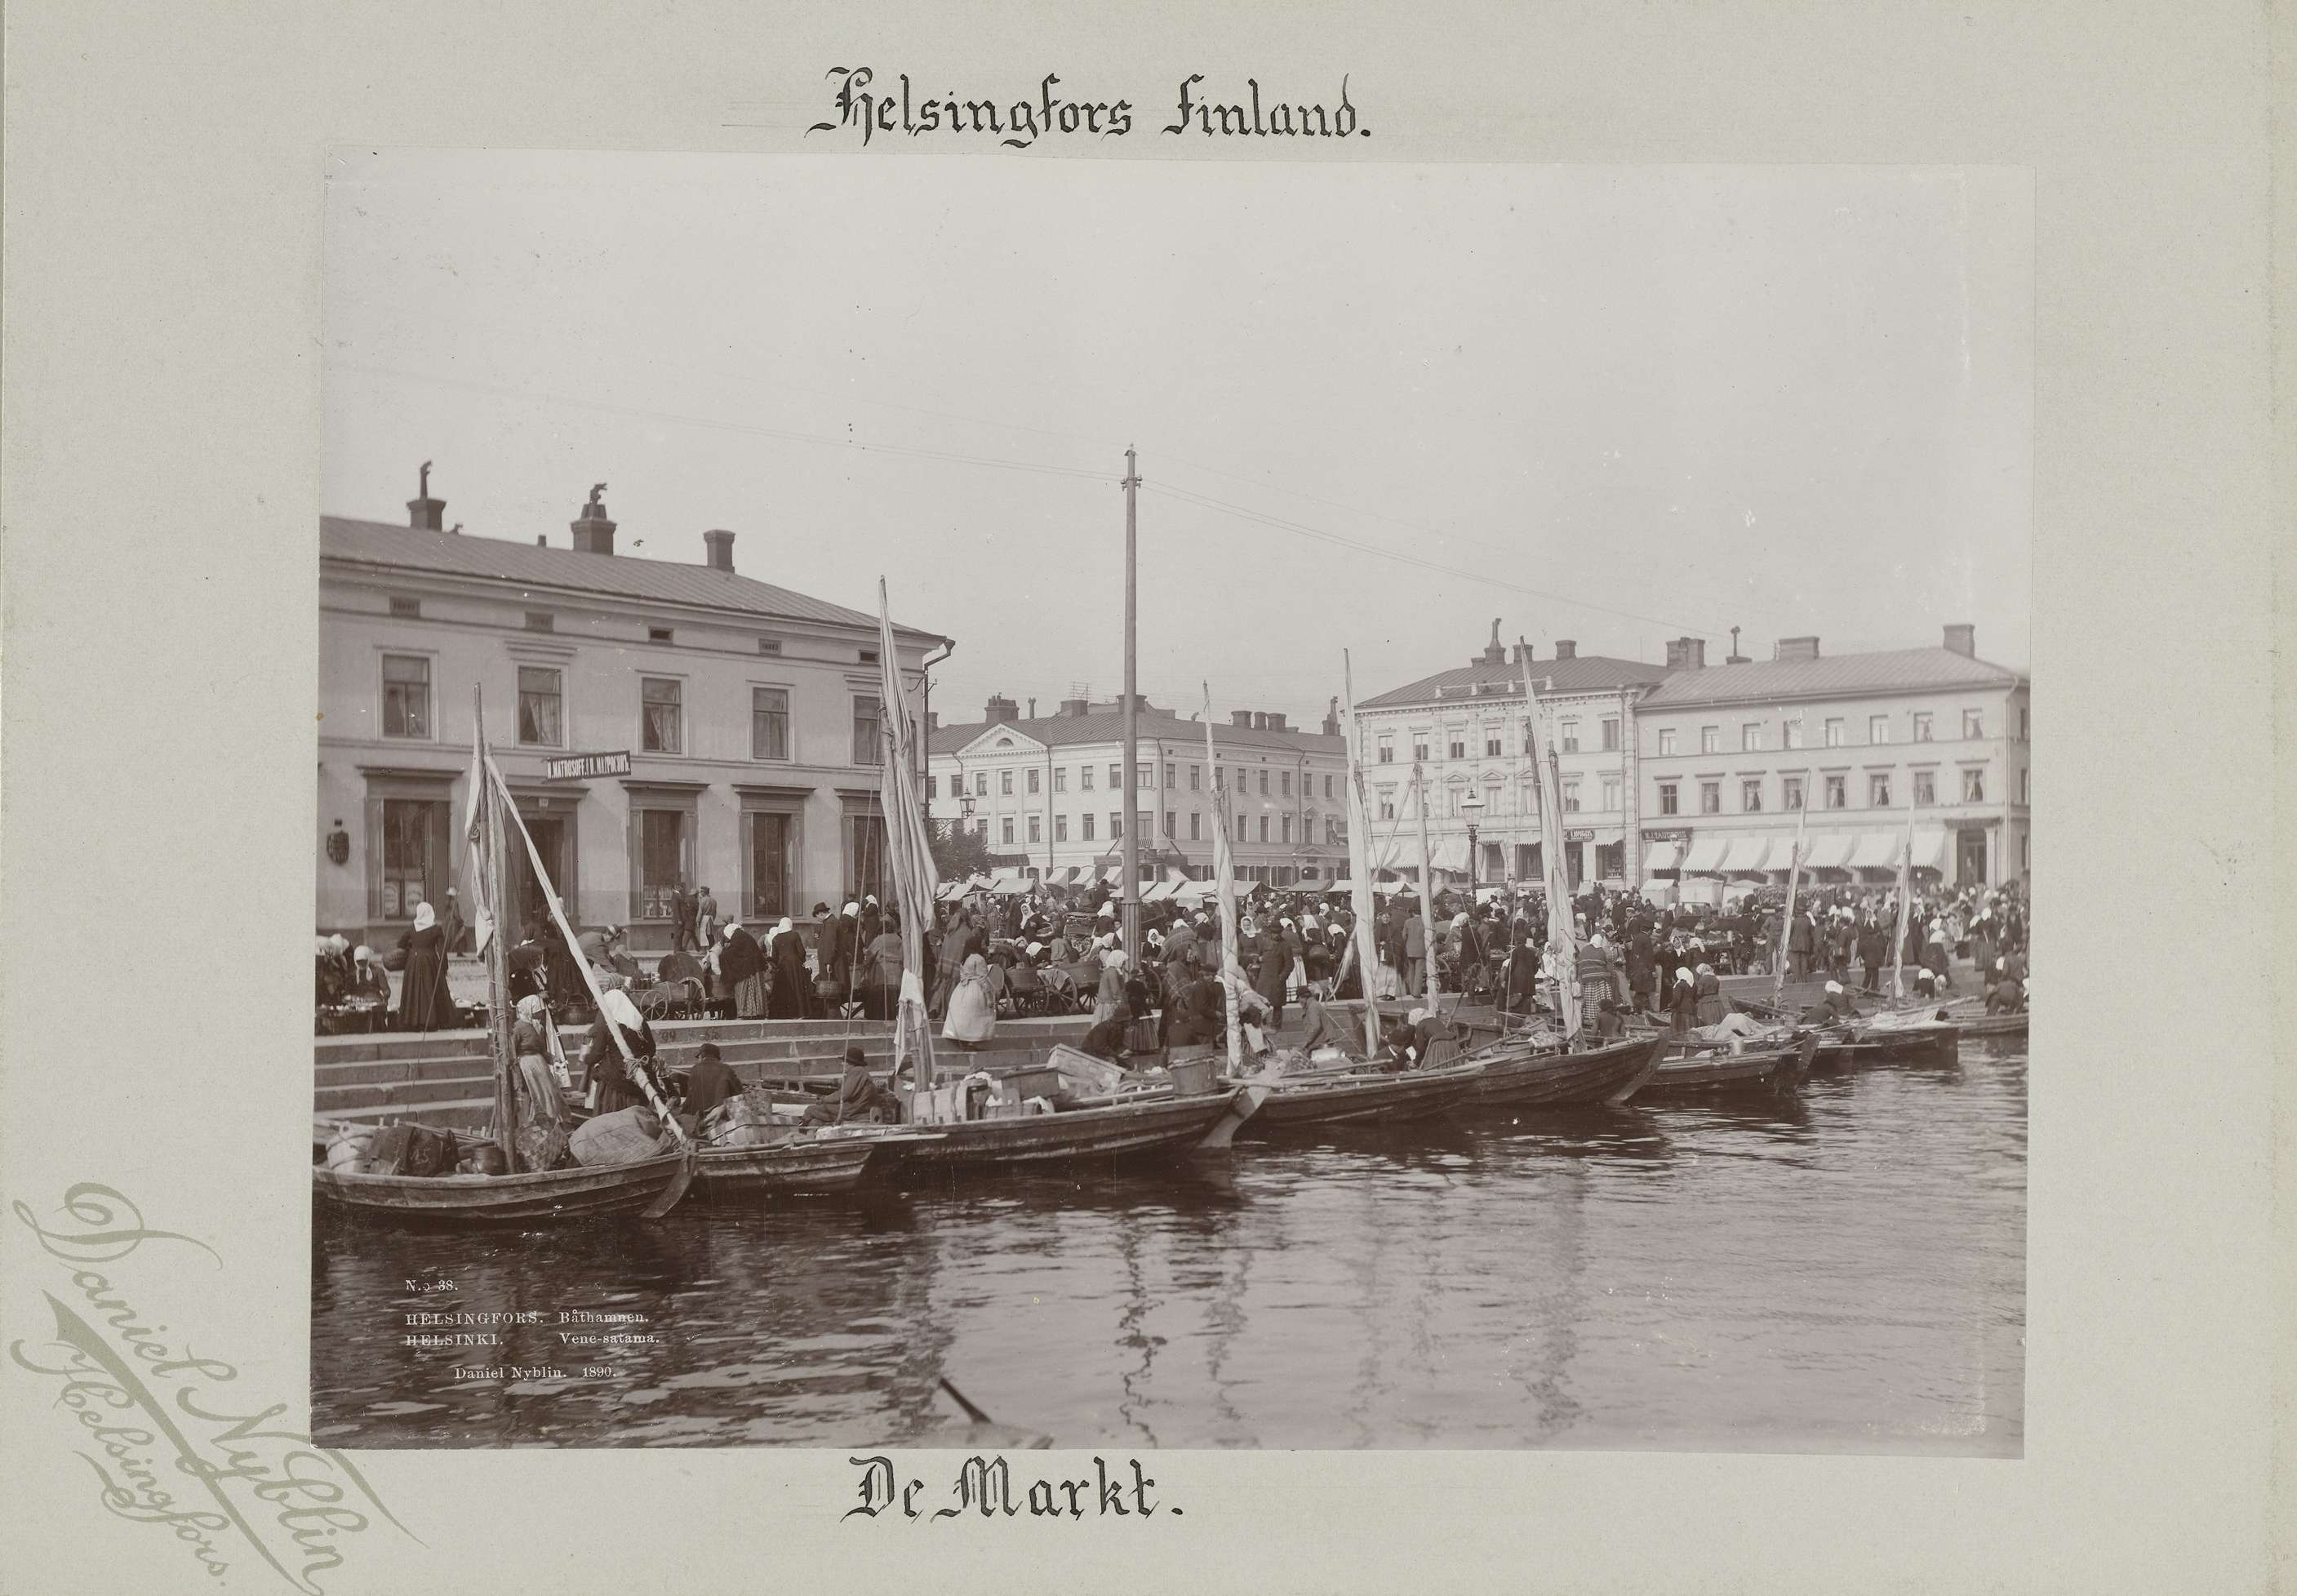 Helsingfors Finland, De markt, Daniel Nybliin Helsingfors., Russian Satama in Helsinki., No. 38. Helsingfors Bathamnen, Daniel Nyblin 1890